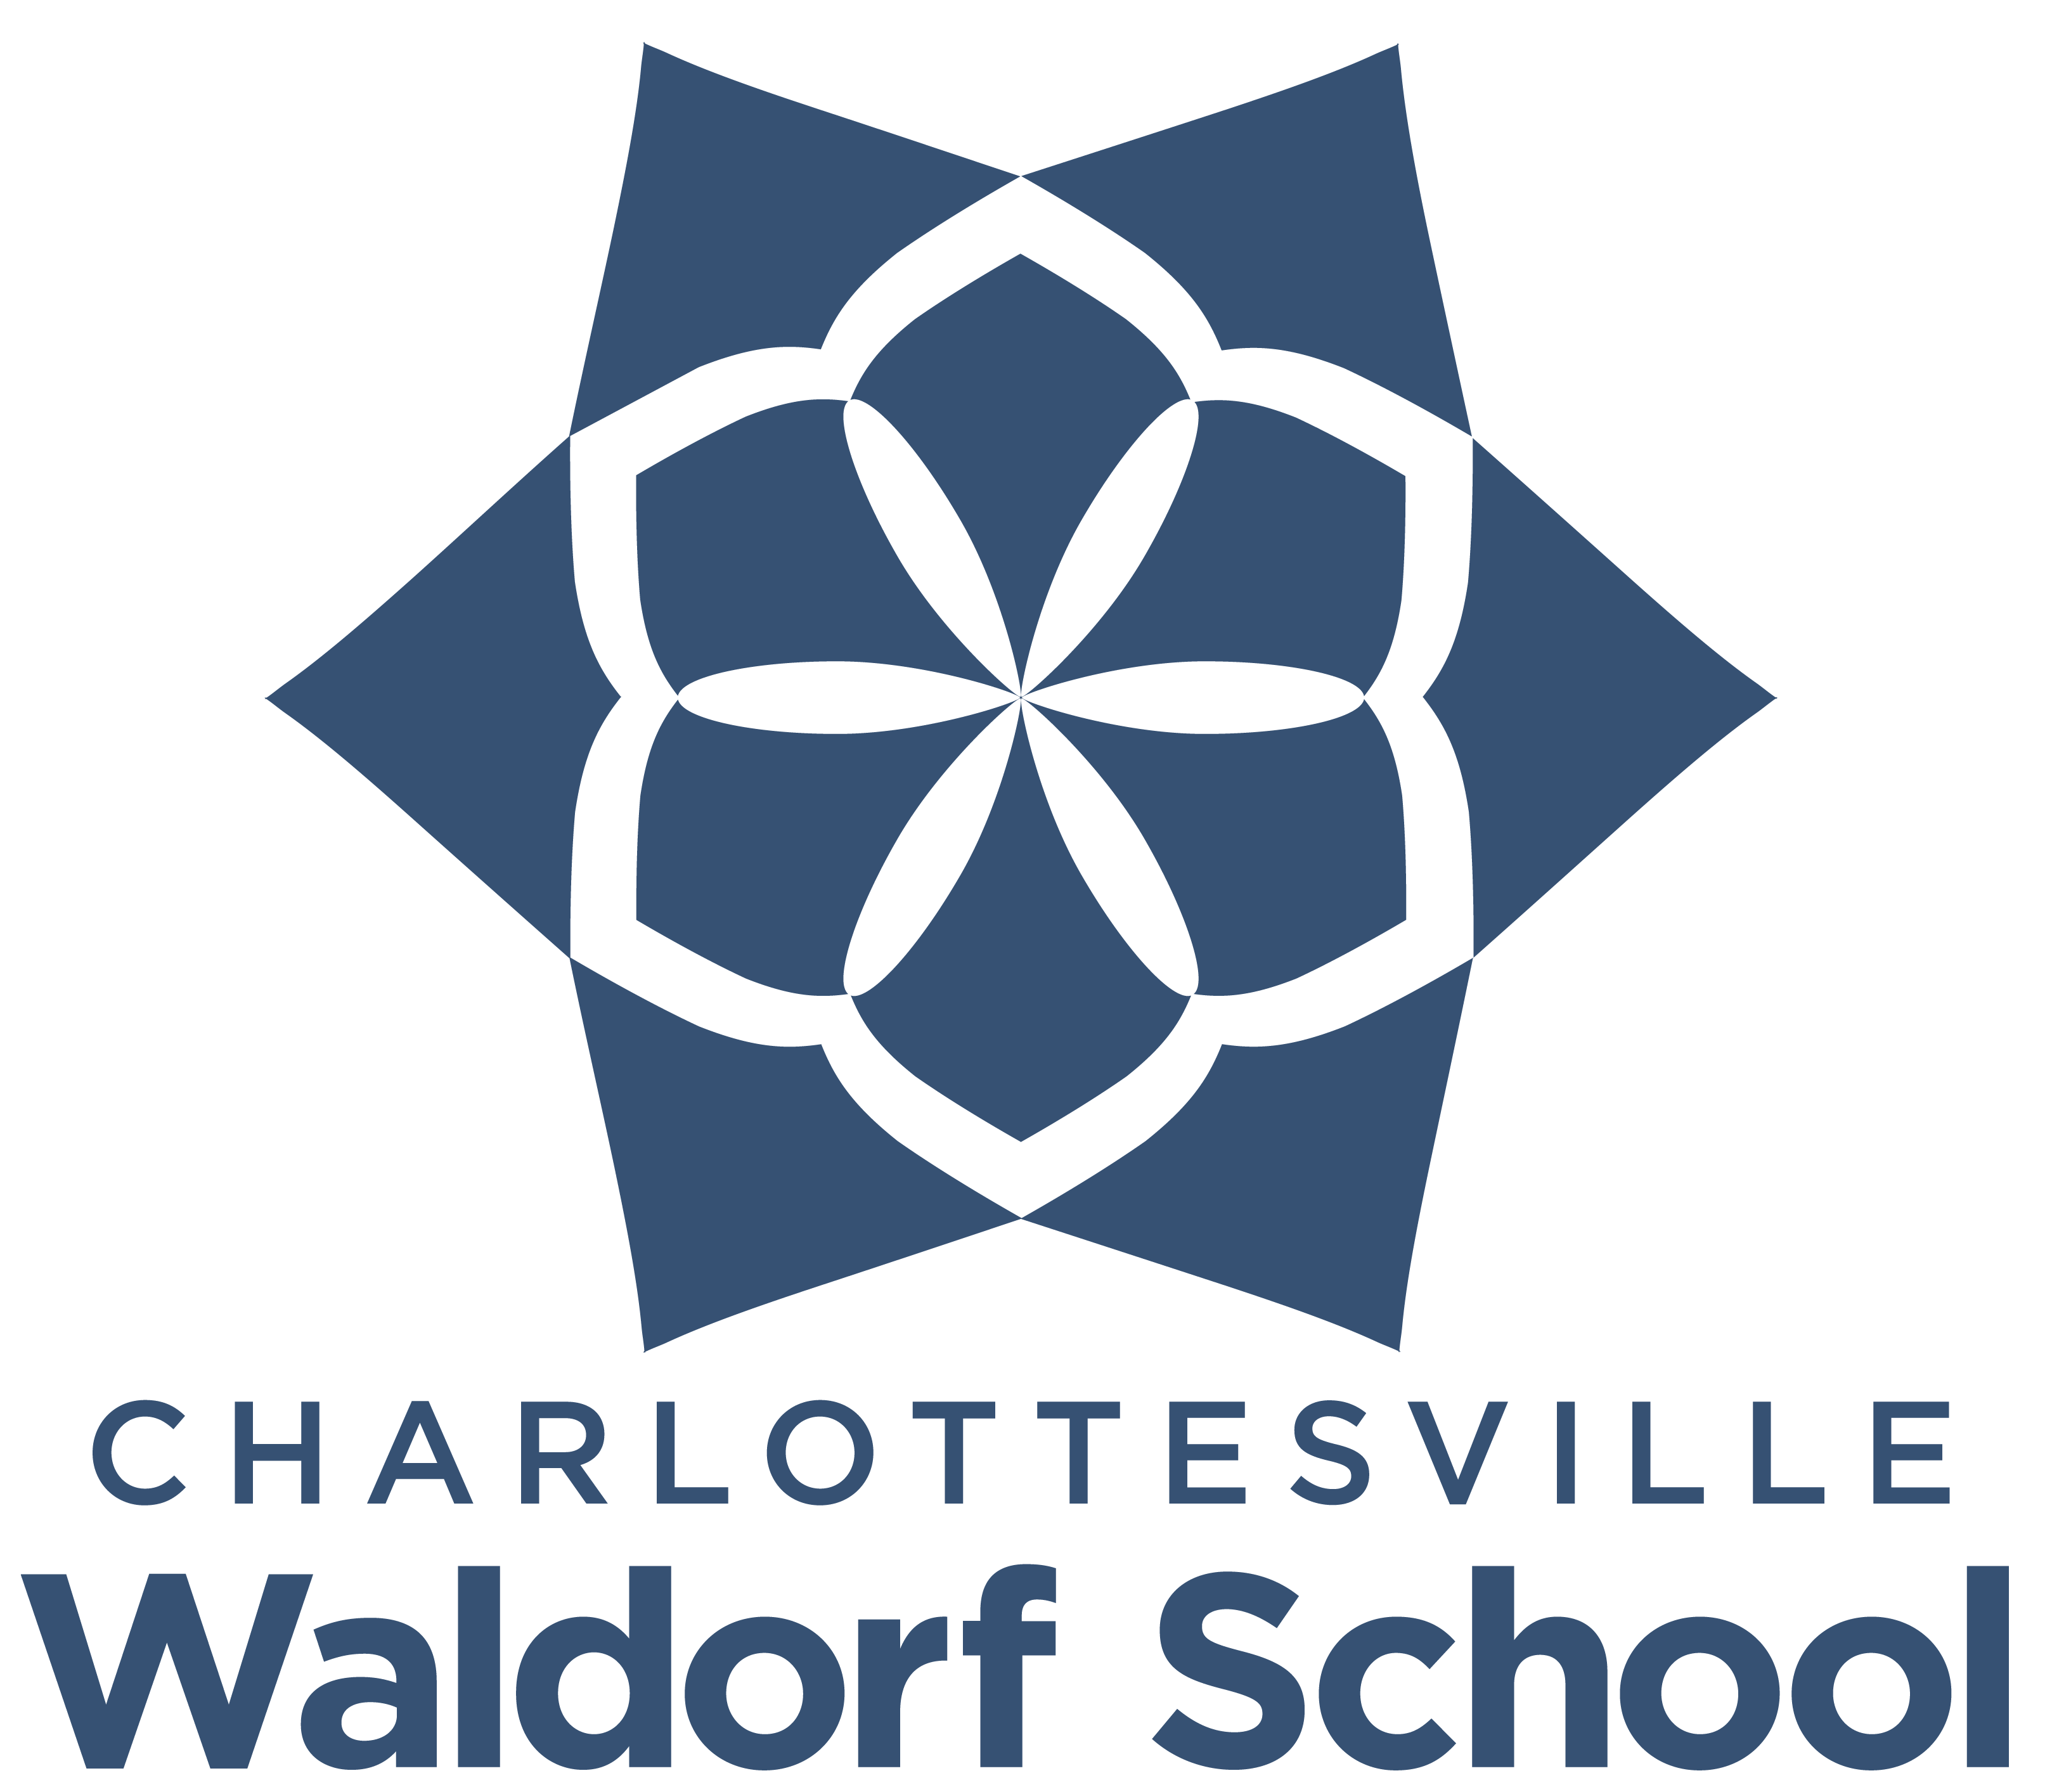 Charlottesville Waldorf School